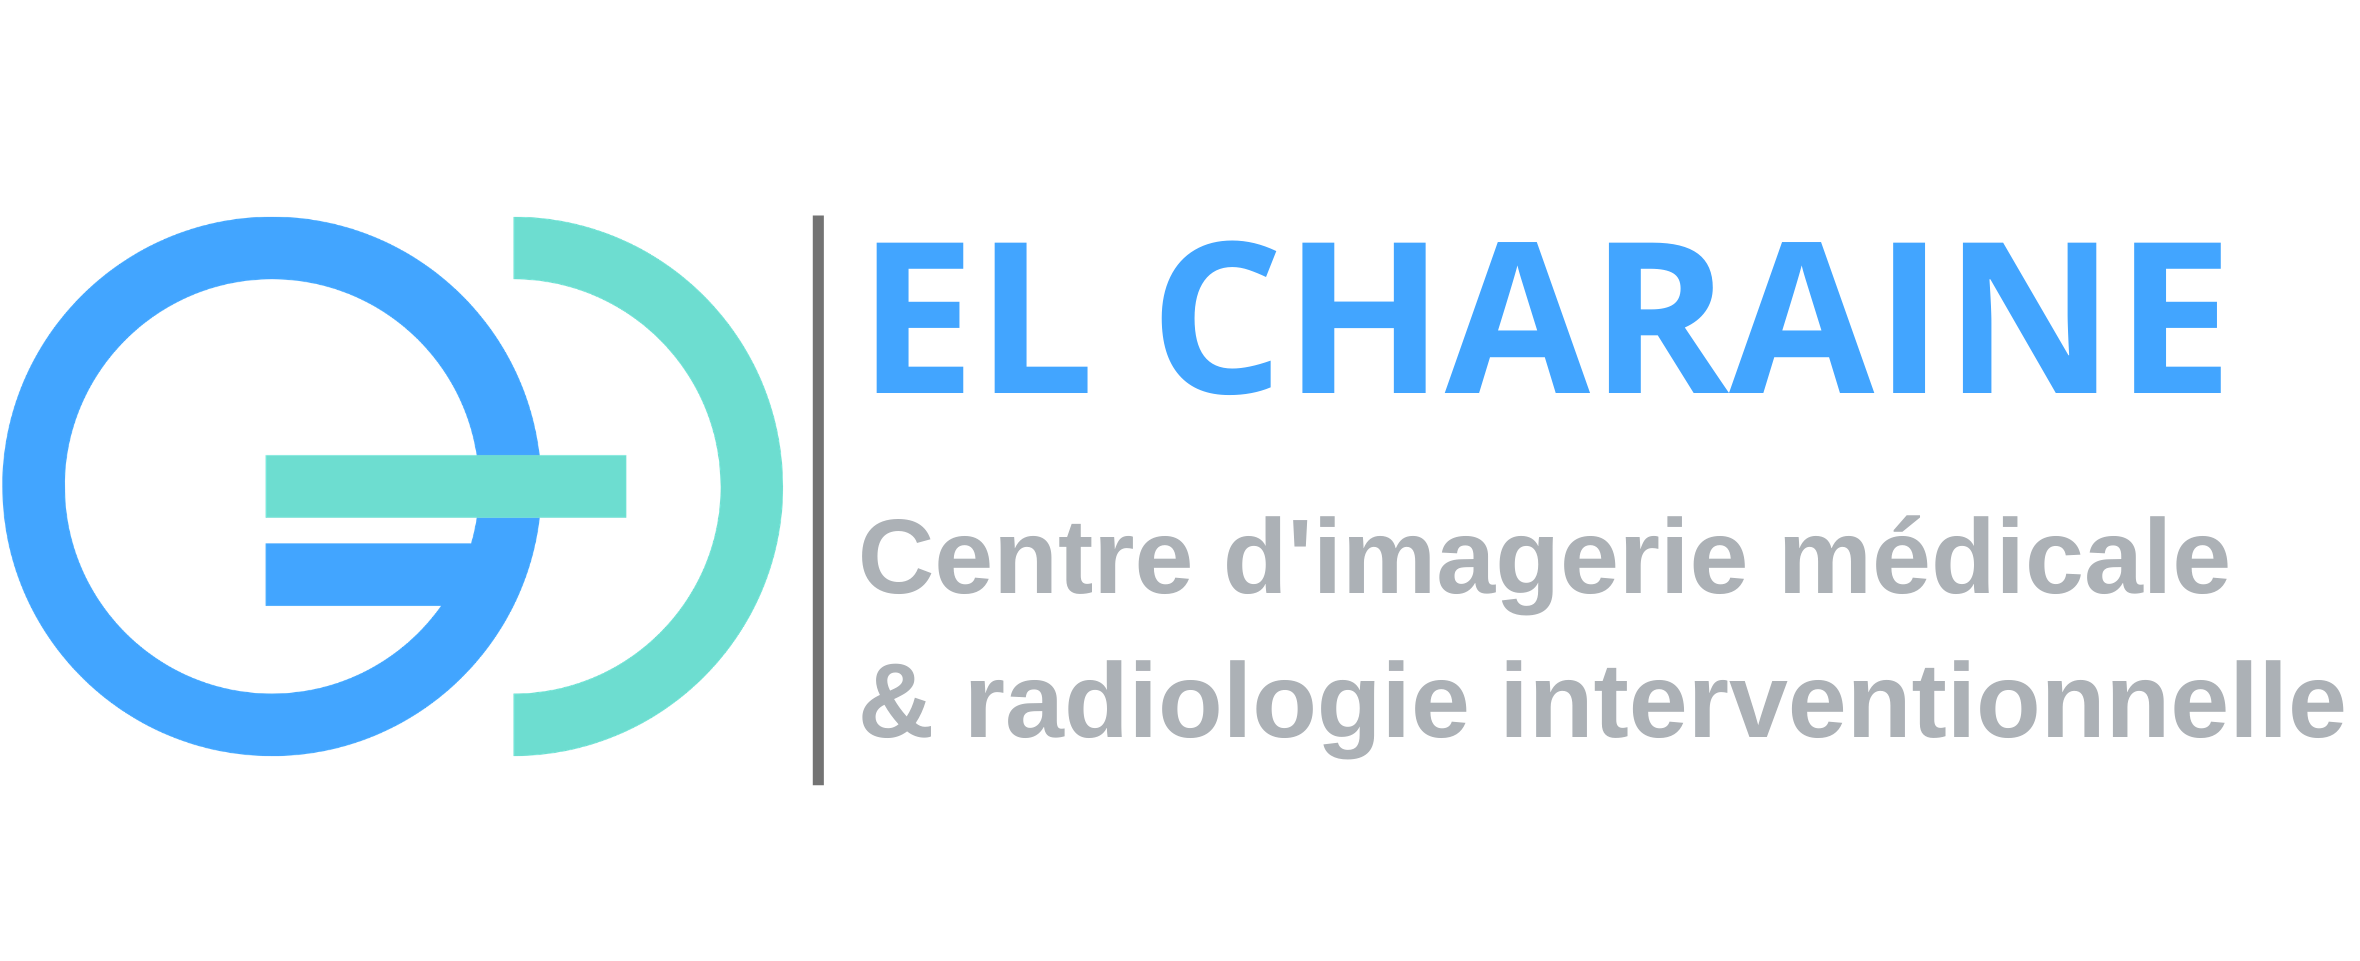 Elcharaine Radiologie